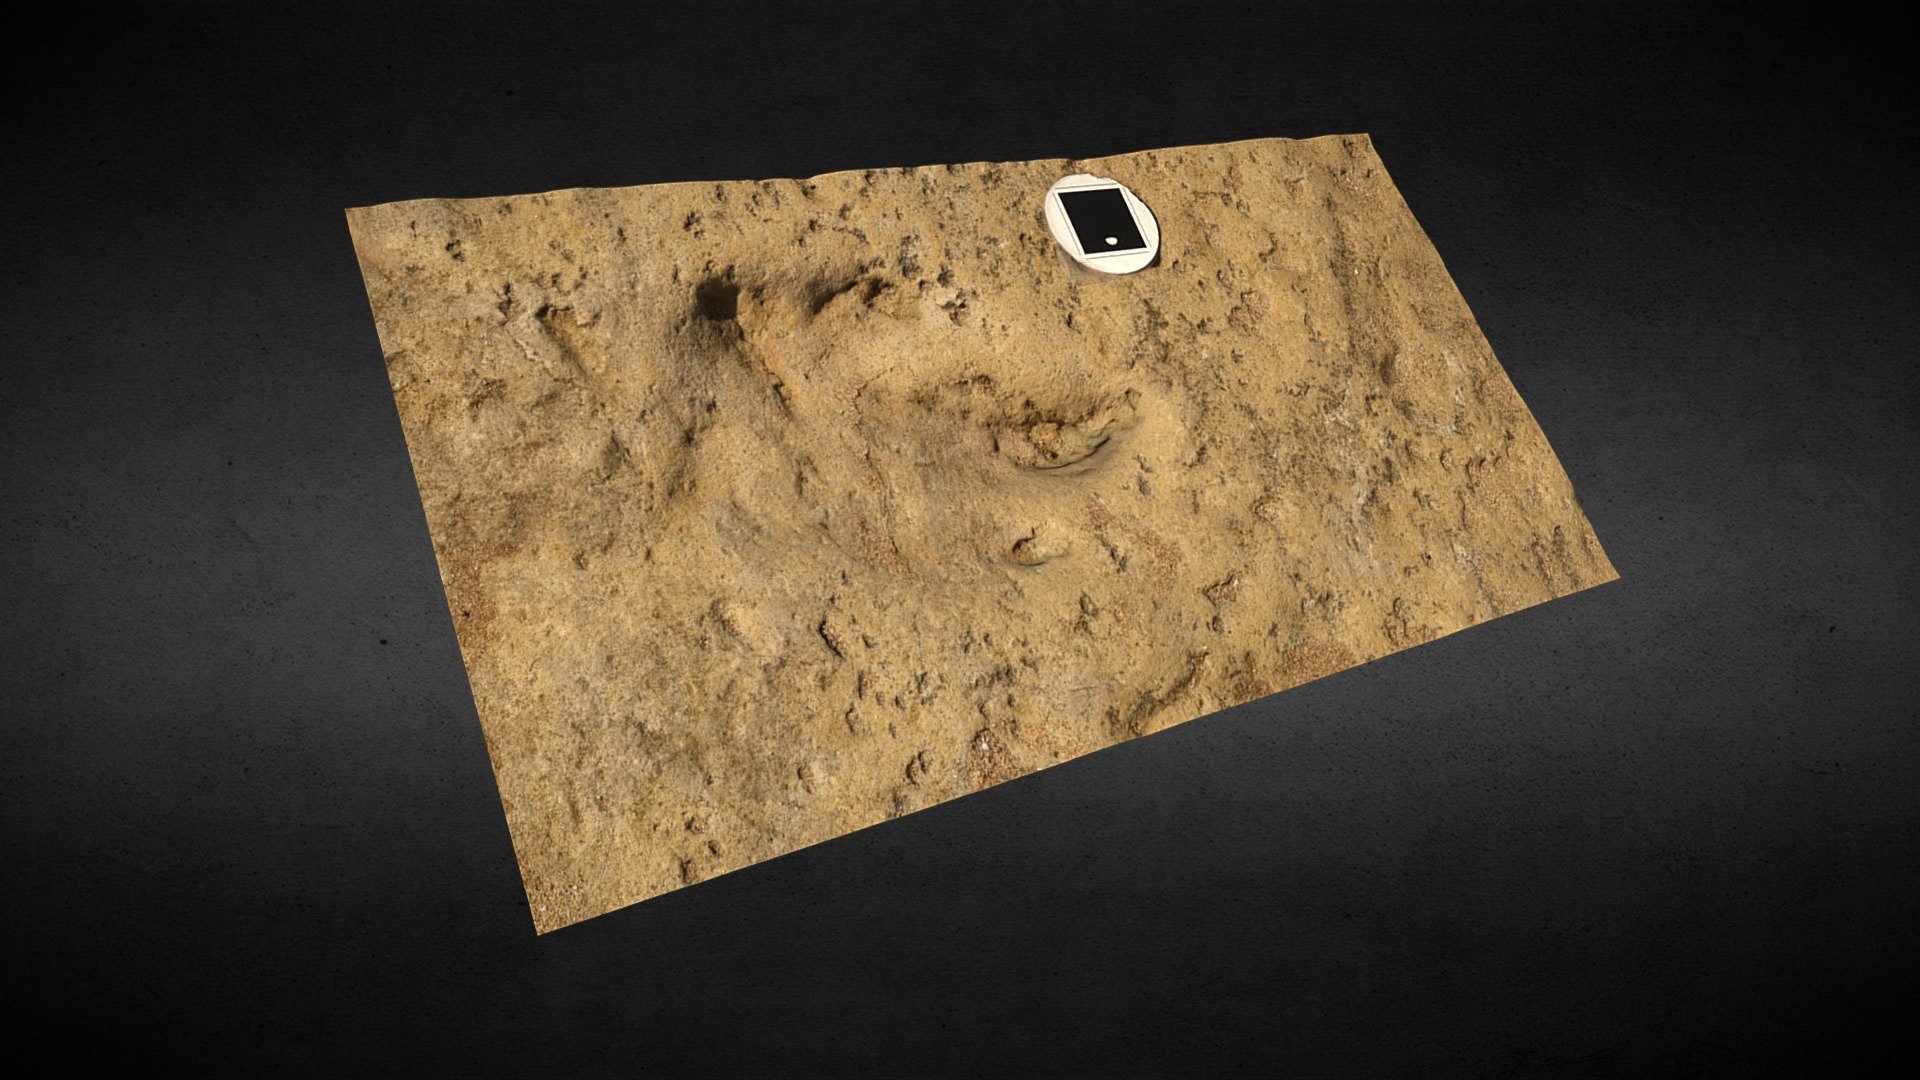 Dinosaur footprint (Tr1) at Anza, Morocco